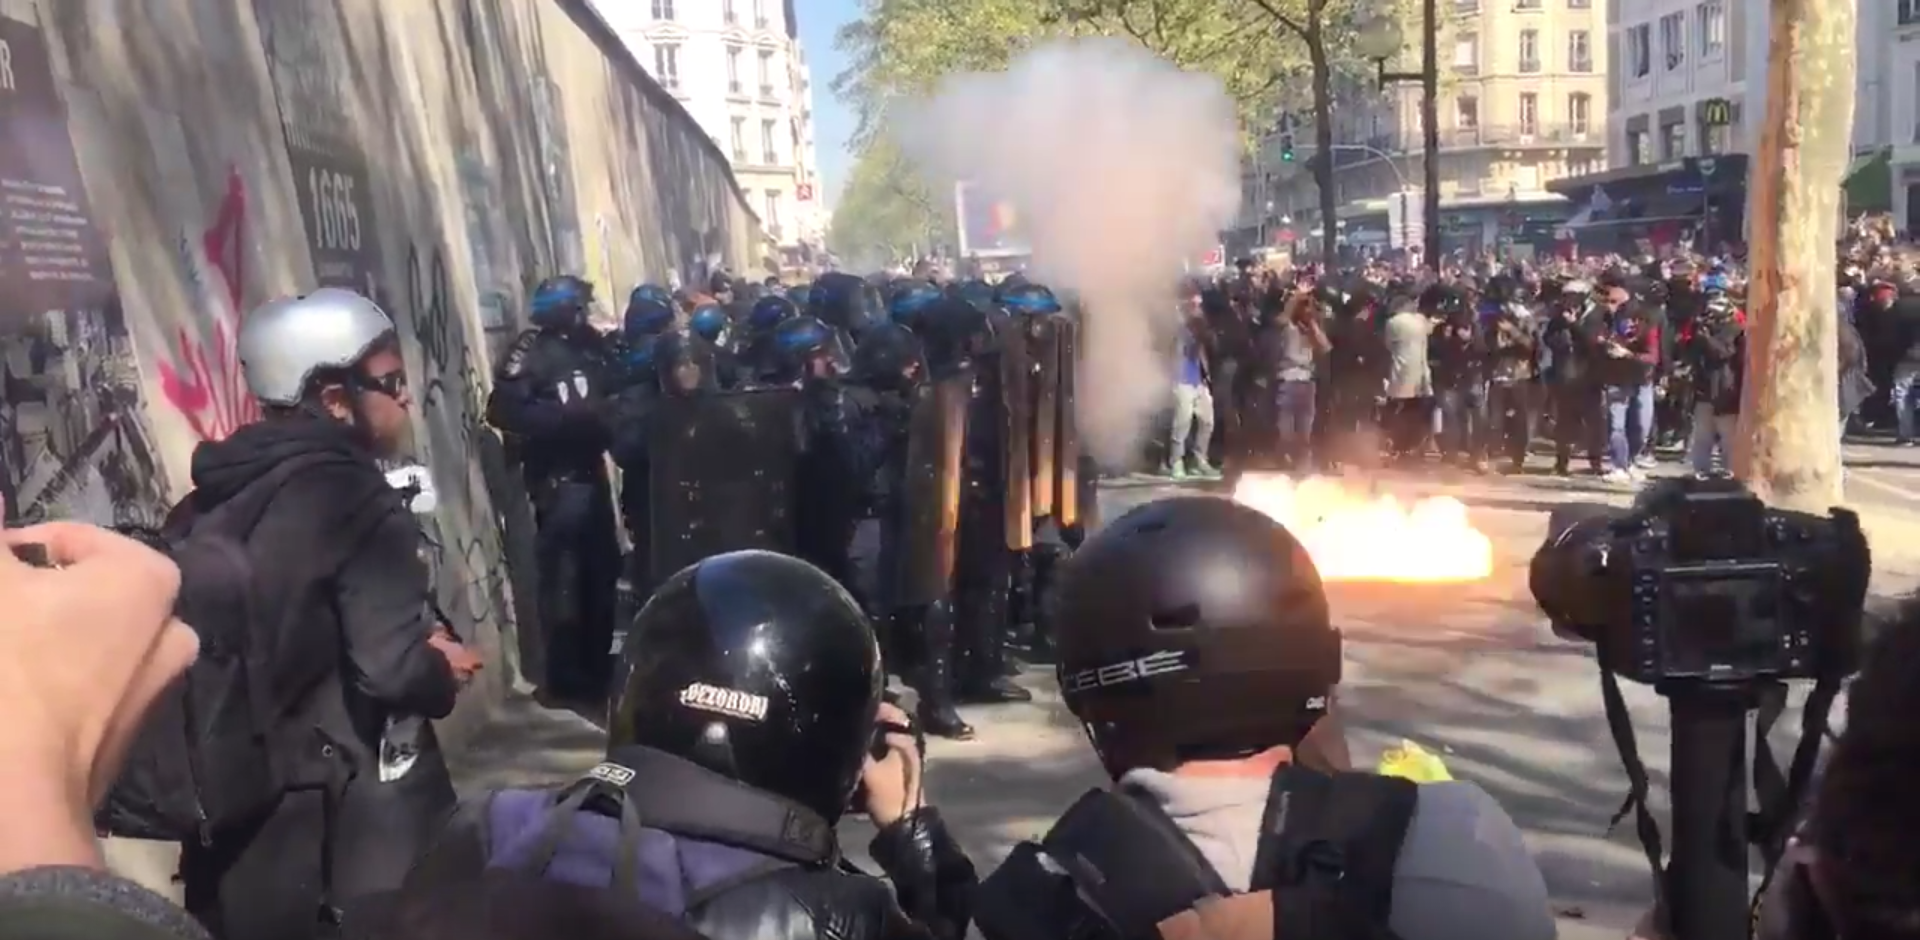 Enfrontaments entre policia i manifestants tensen l'1 de maig a París